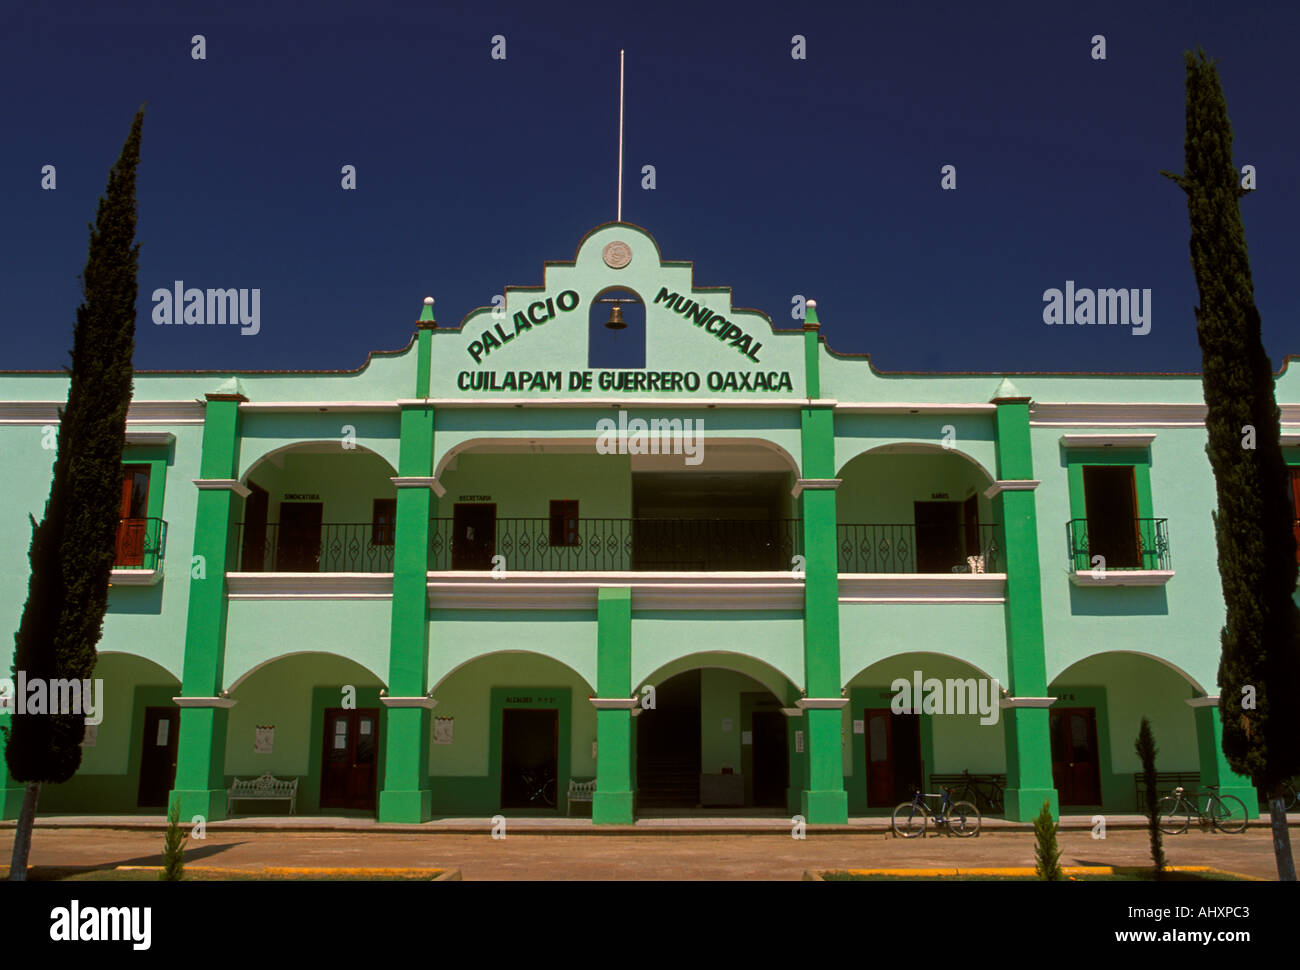 Palacio Municipal, municipal palace, municipal building, town hall, city hall, Cuilapam de Guerrero, Oaxaca State, Mexico Stock Photo